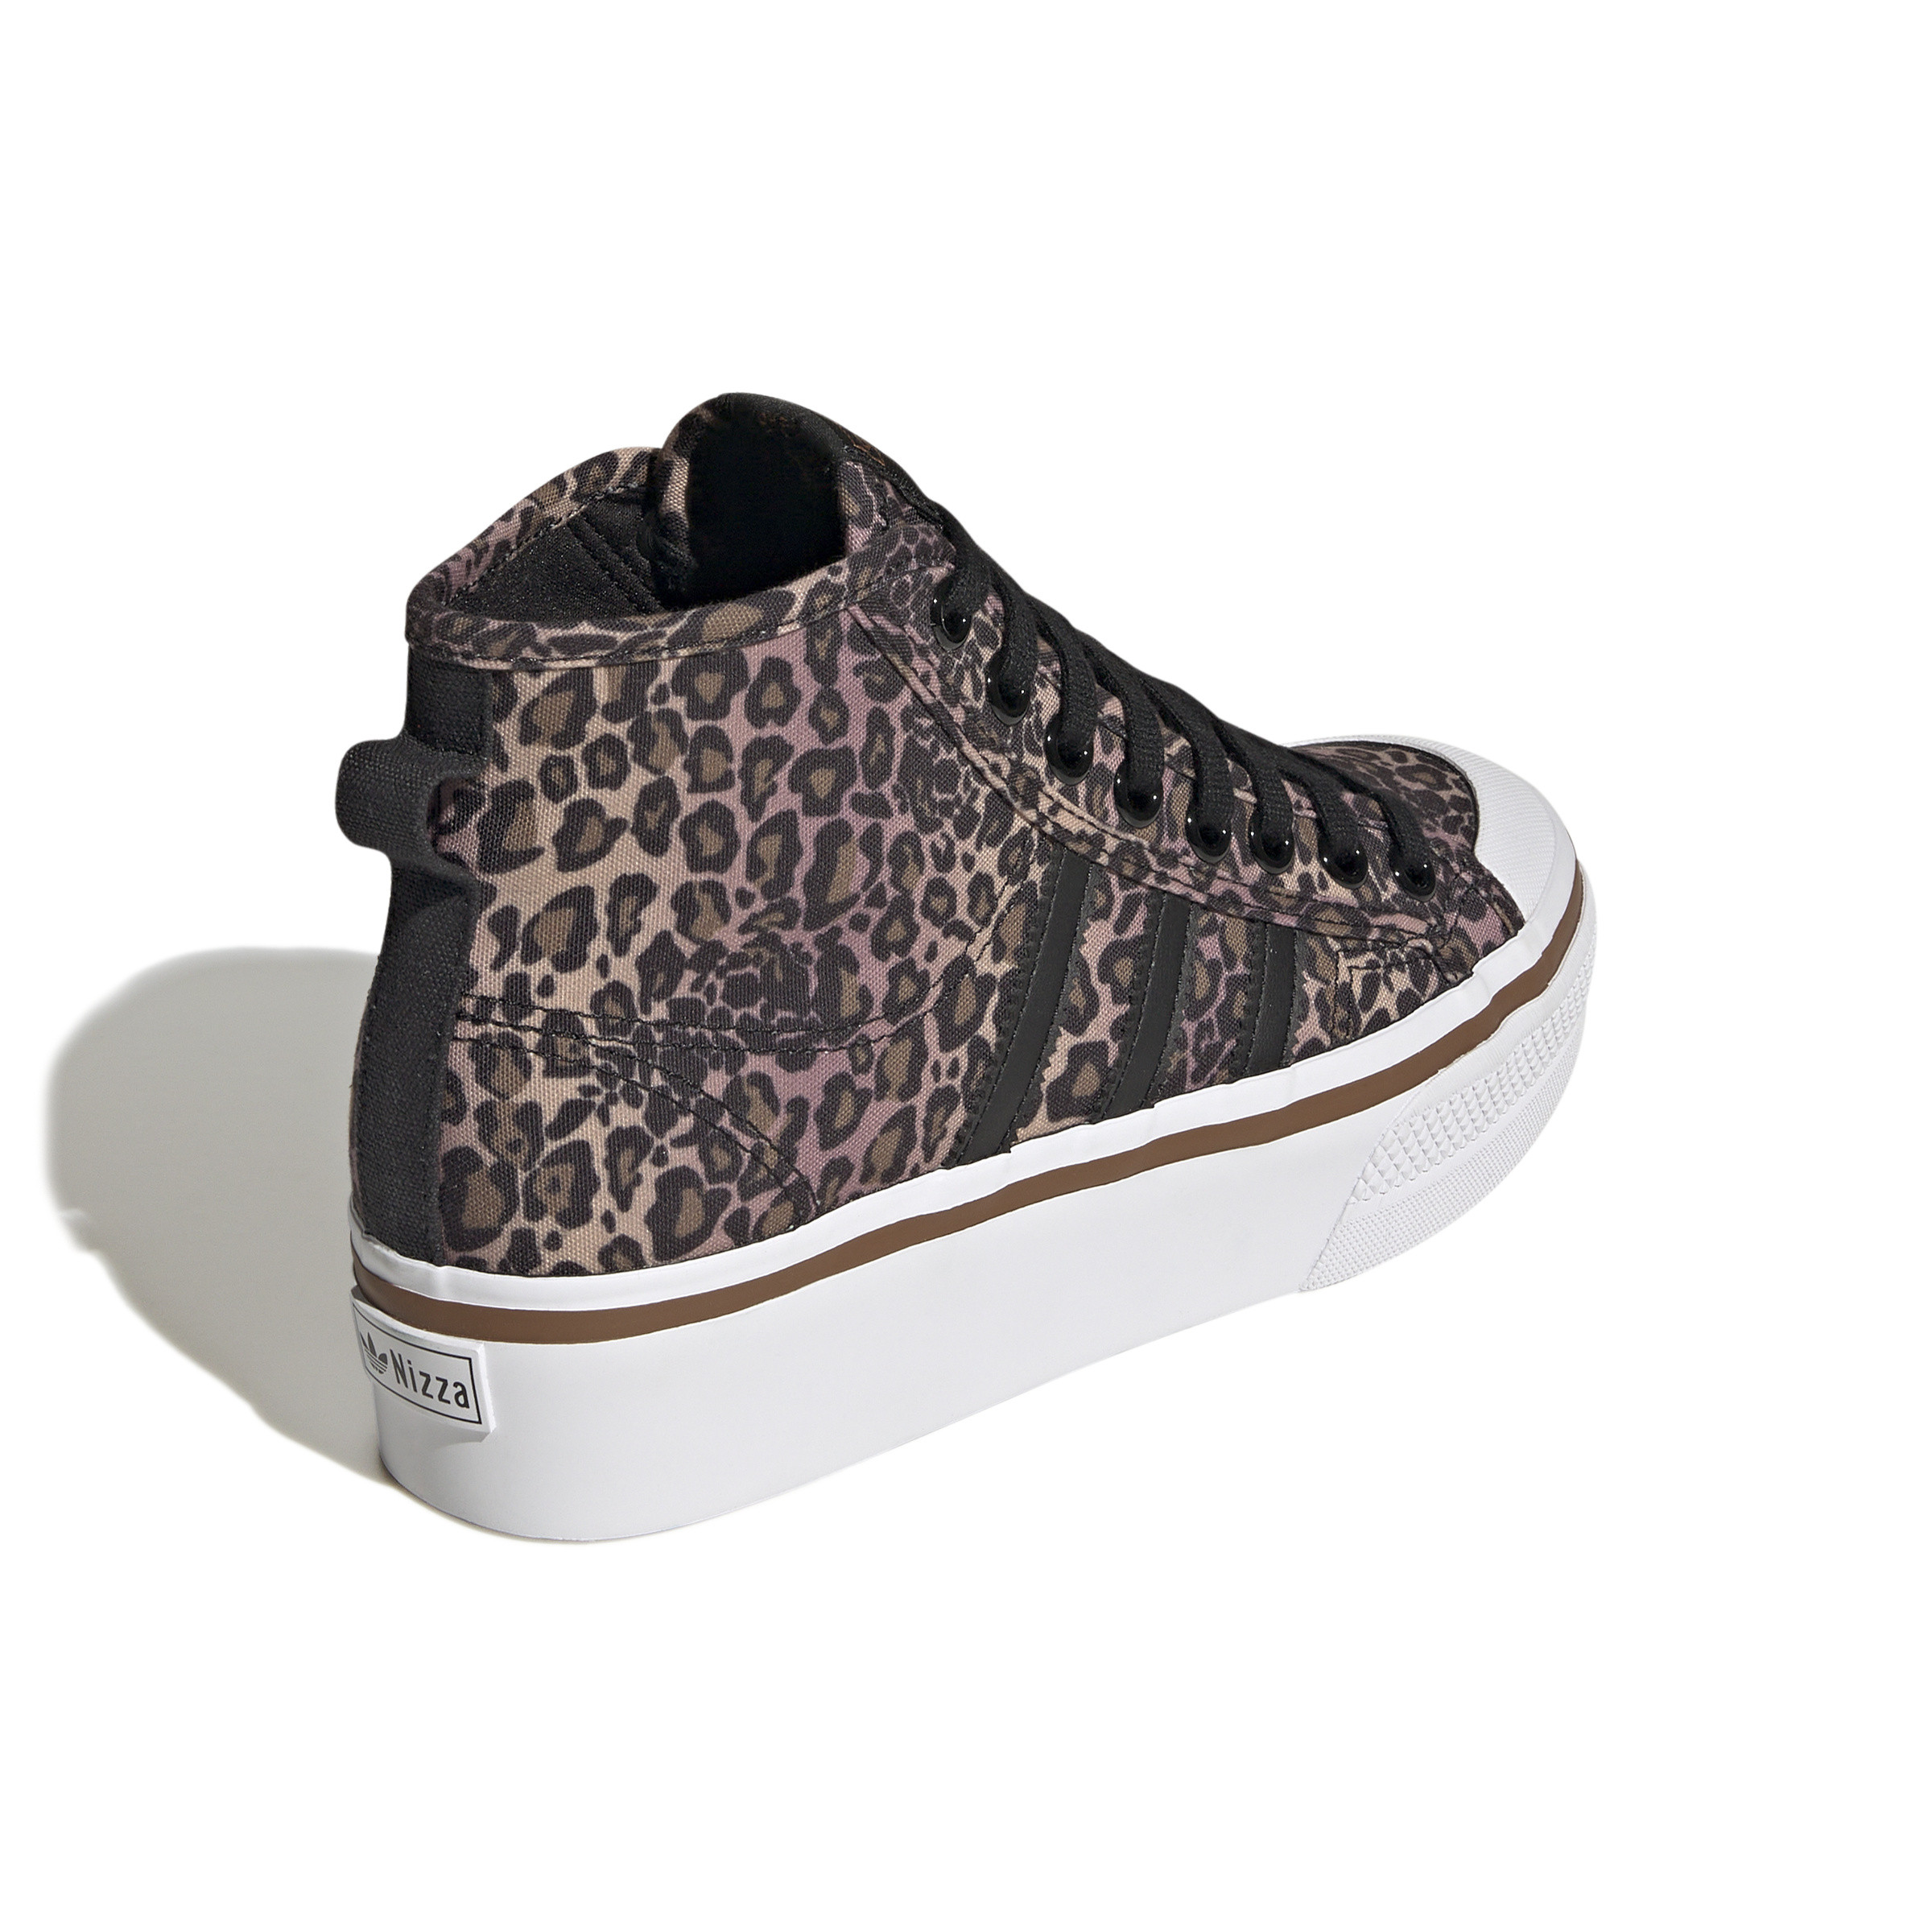 Adidas - Nice Platform Mid Shoes, Brown, large image number 2